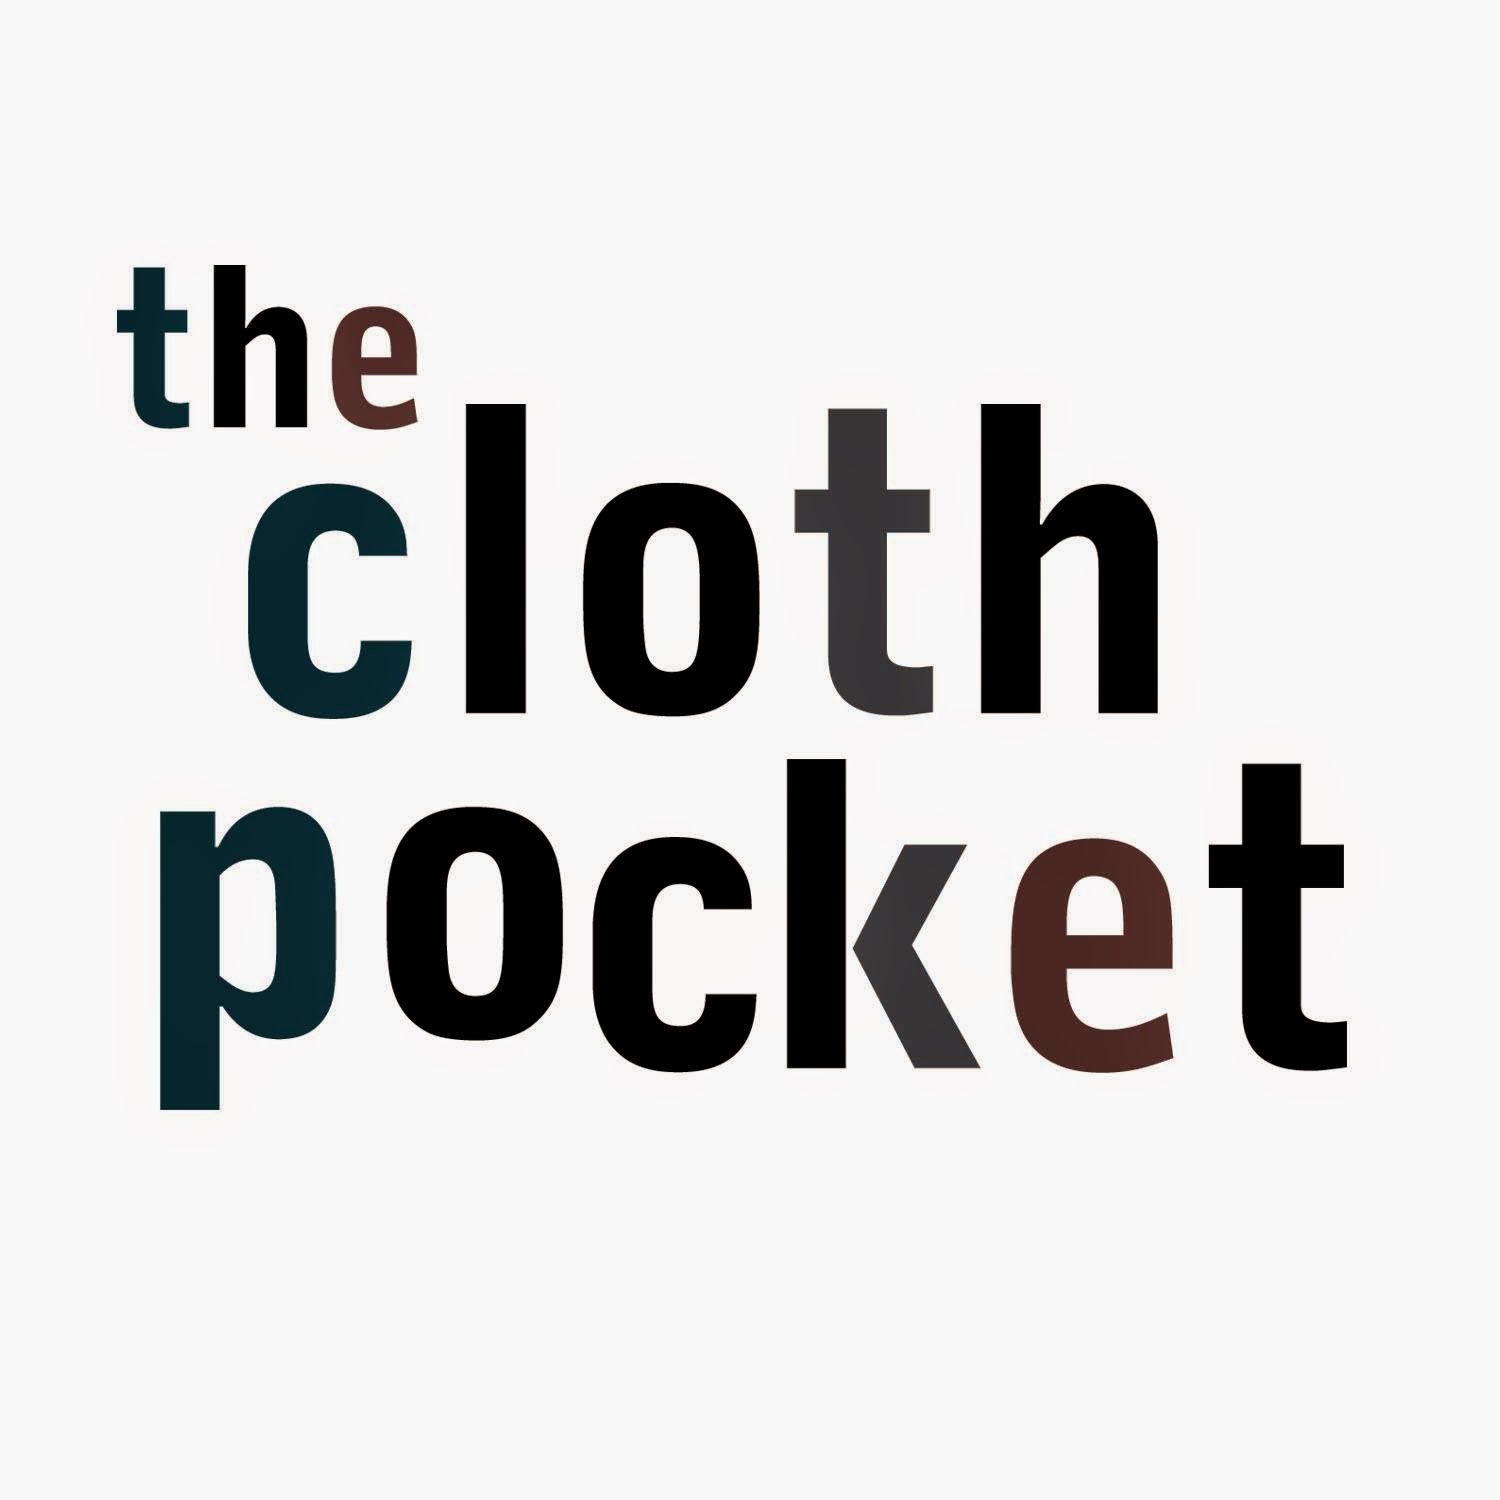 TMQG supports The Cloth Pocket